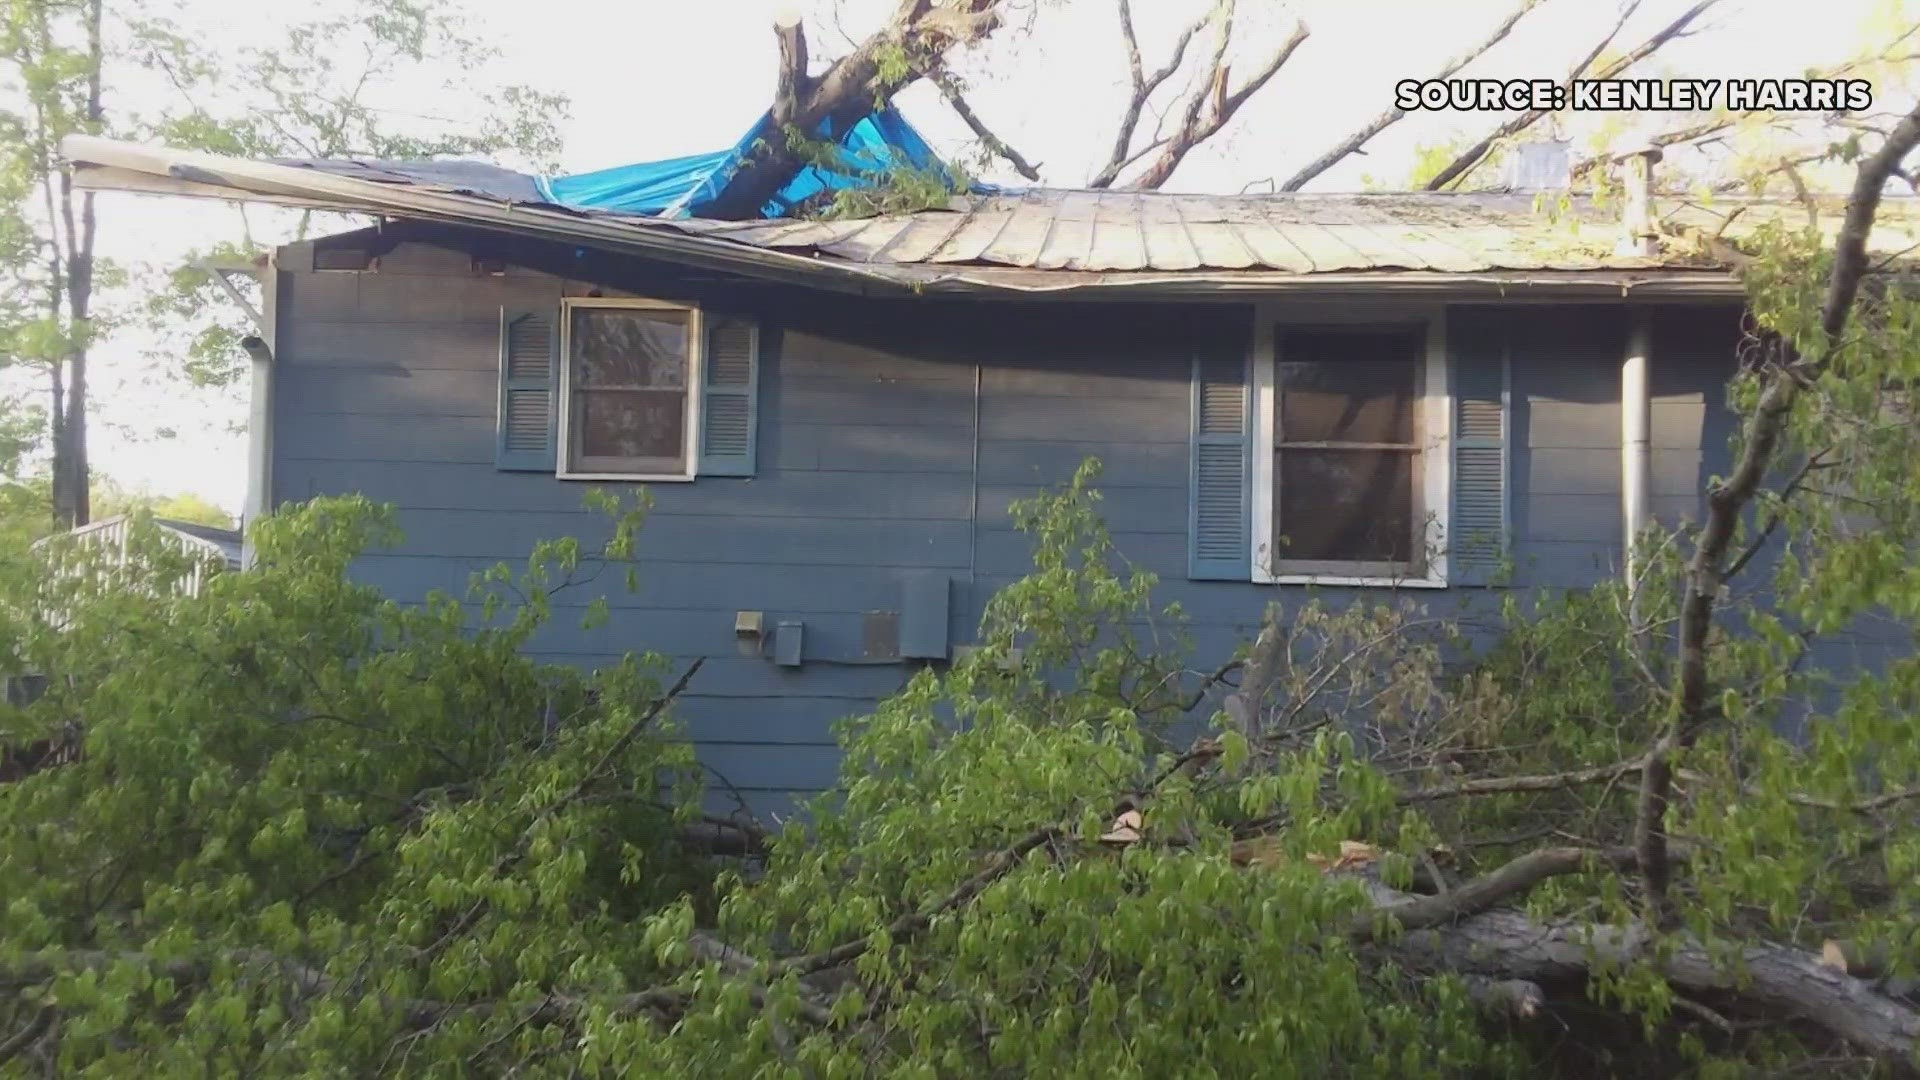 Five years ago an EF-2 tornado destroyed Kenly and Yolanda Harris' Greensboro home.